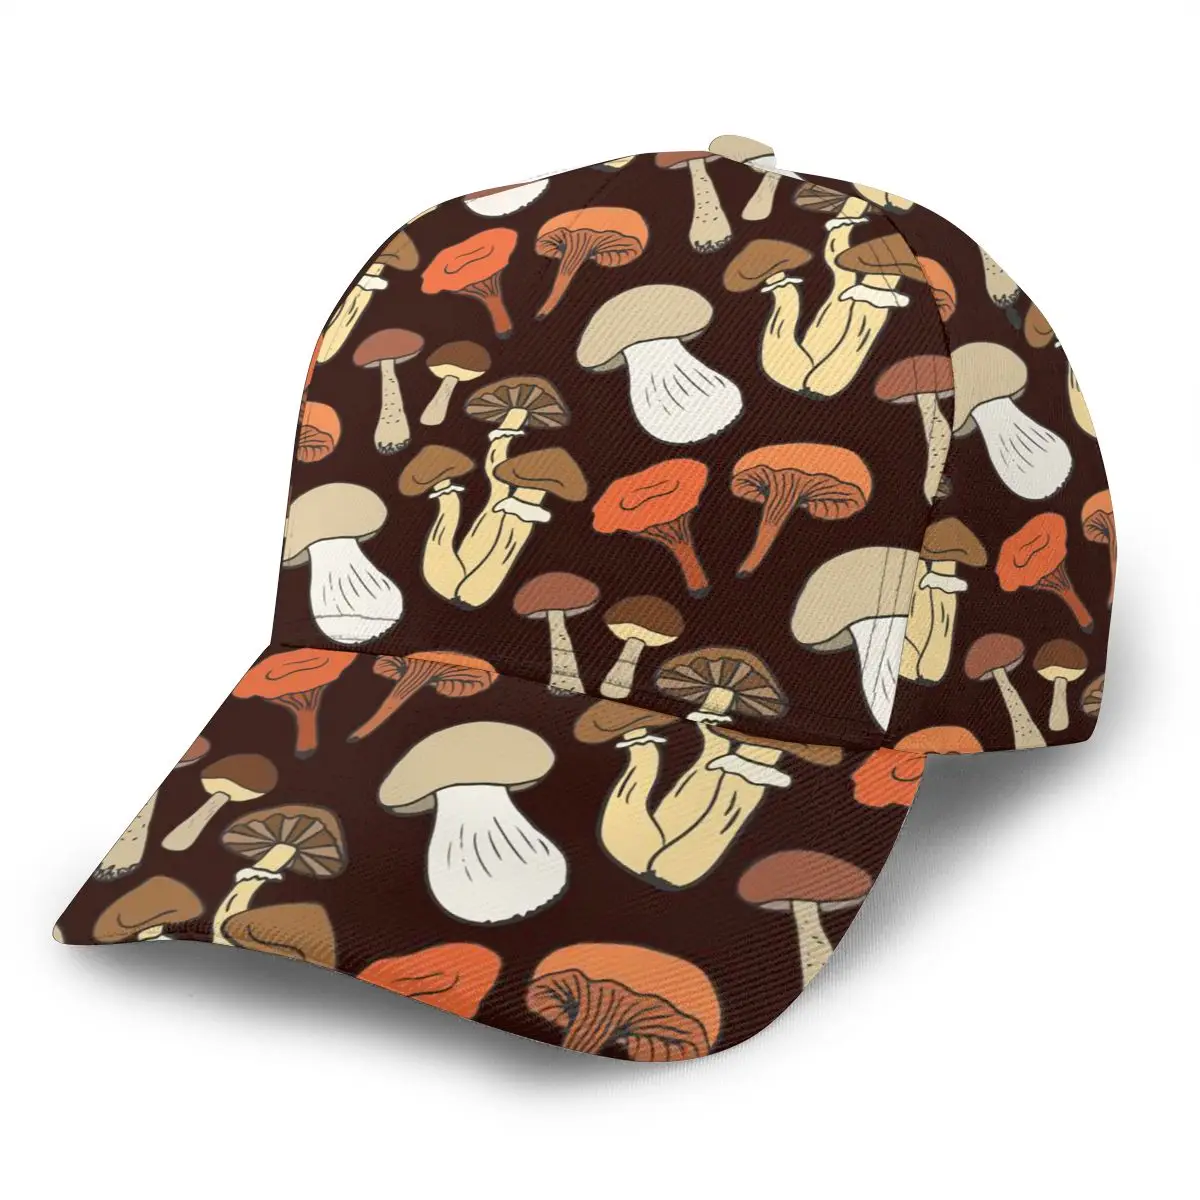 

NOISYDESIGNS Summer Autumn Fashion Men Women Baseball Cap Mushrooms Pattern Hat HipHop Adjustable Cool Sunhat Casquette 2021